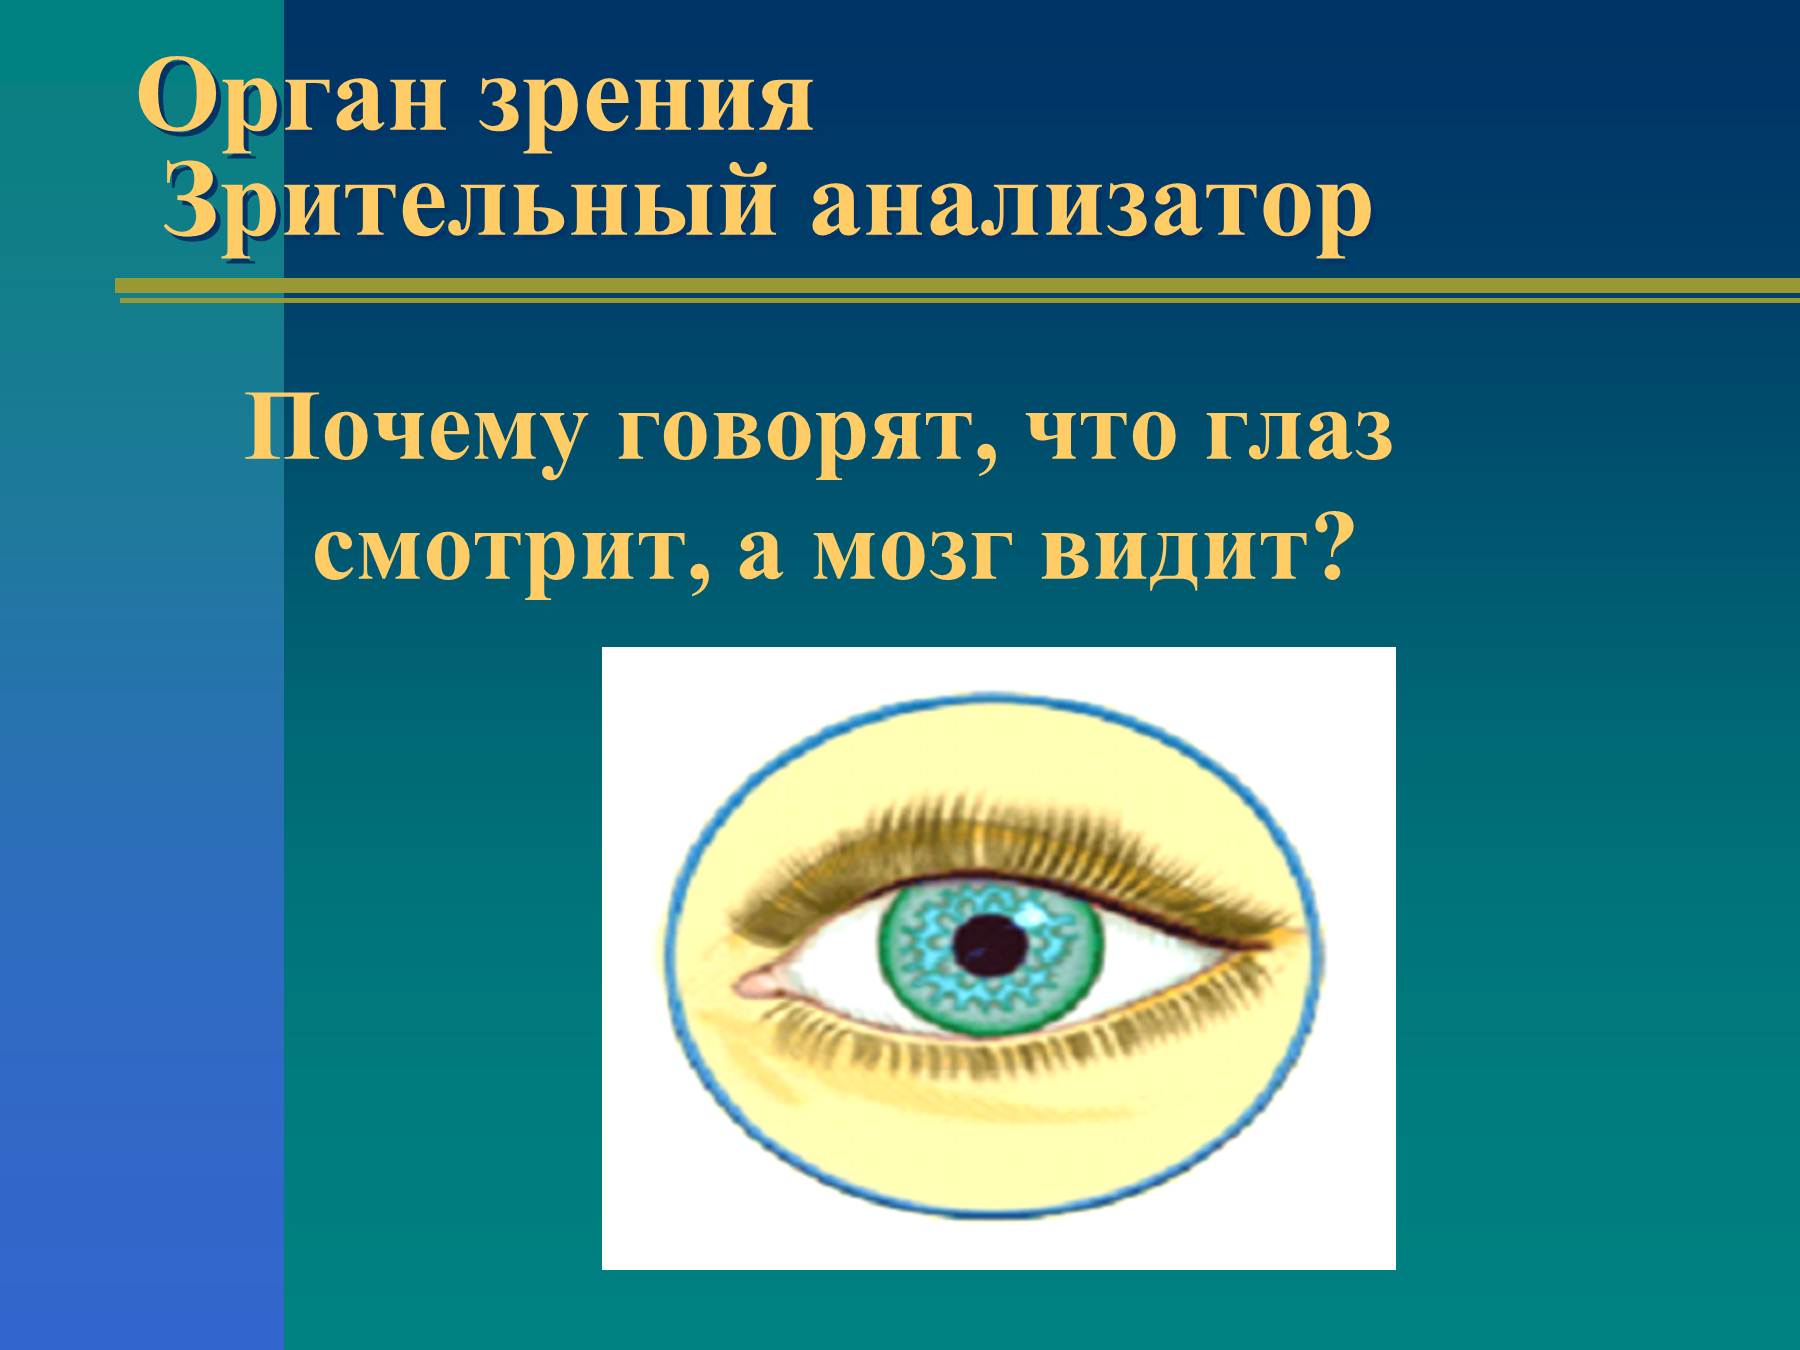 Глаз 8 класс. Анализатор глаза биология 8 класс. Орган зрения. Орган зрения и зрительный анализатор. Орган зрения презентация.